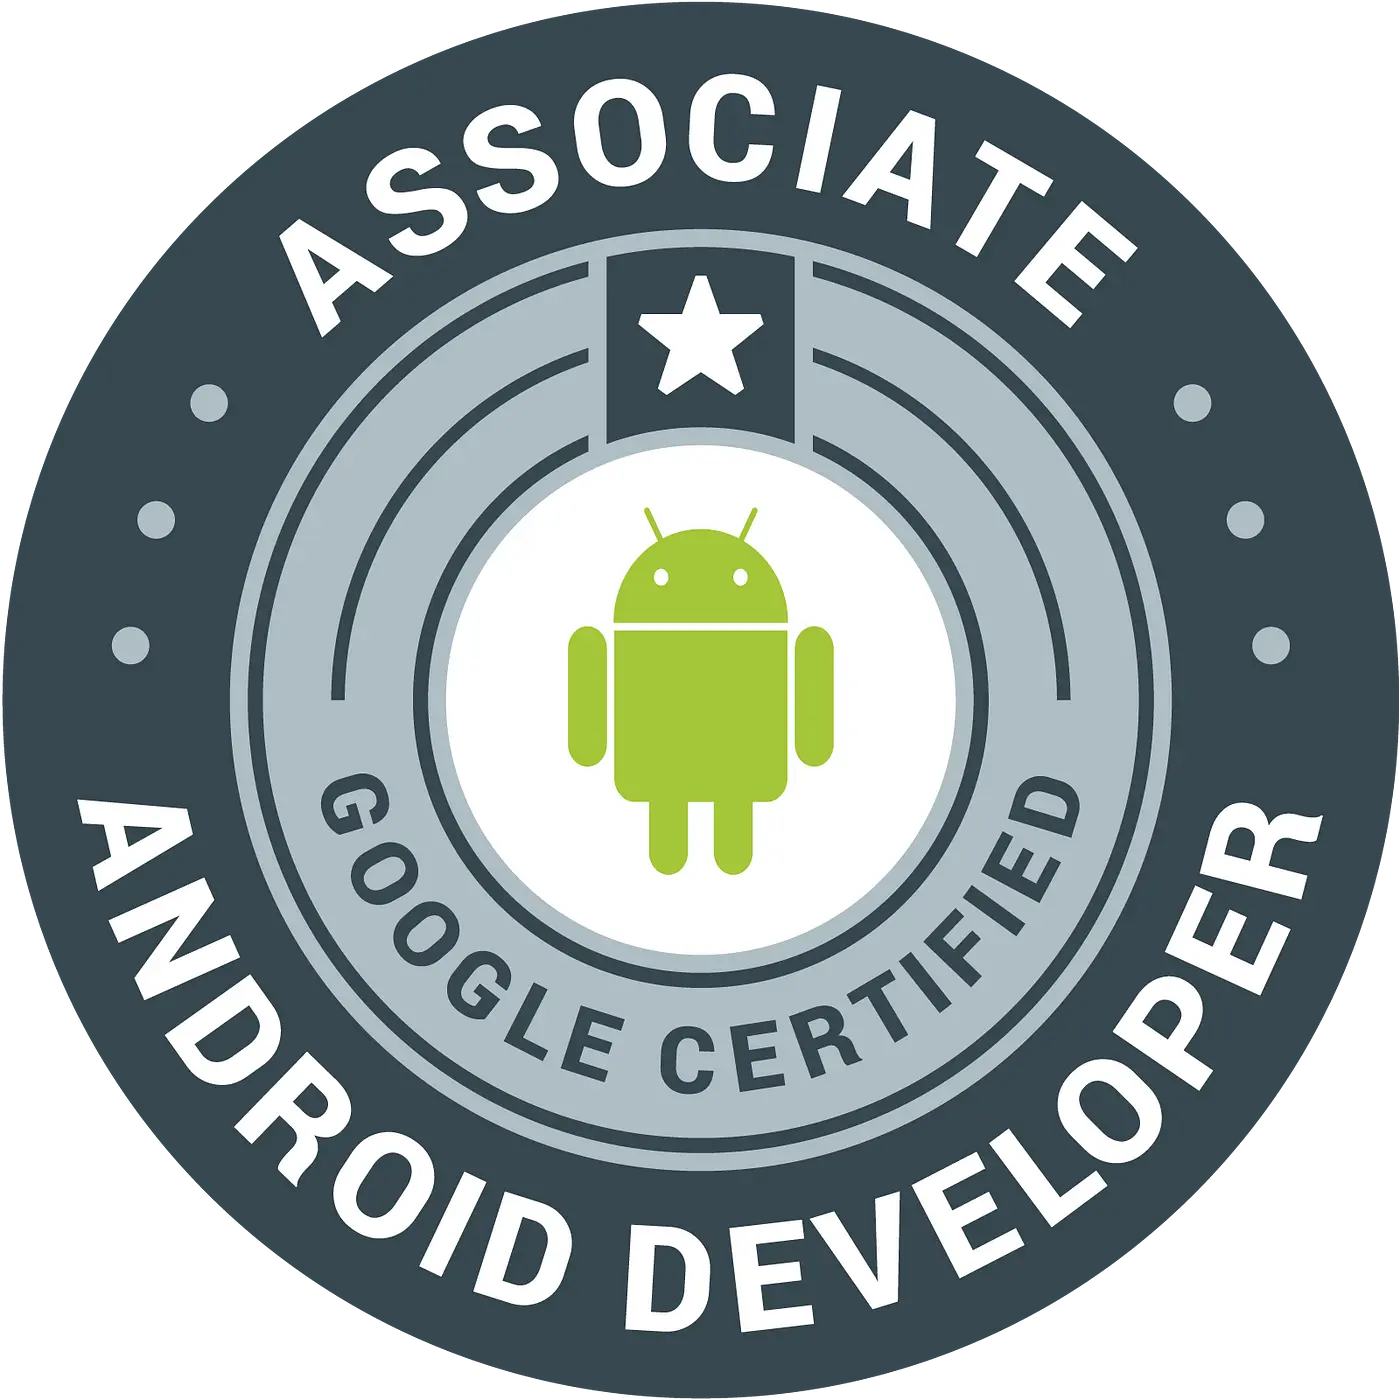 Google Certified Android Developer Logo